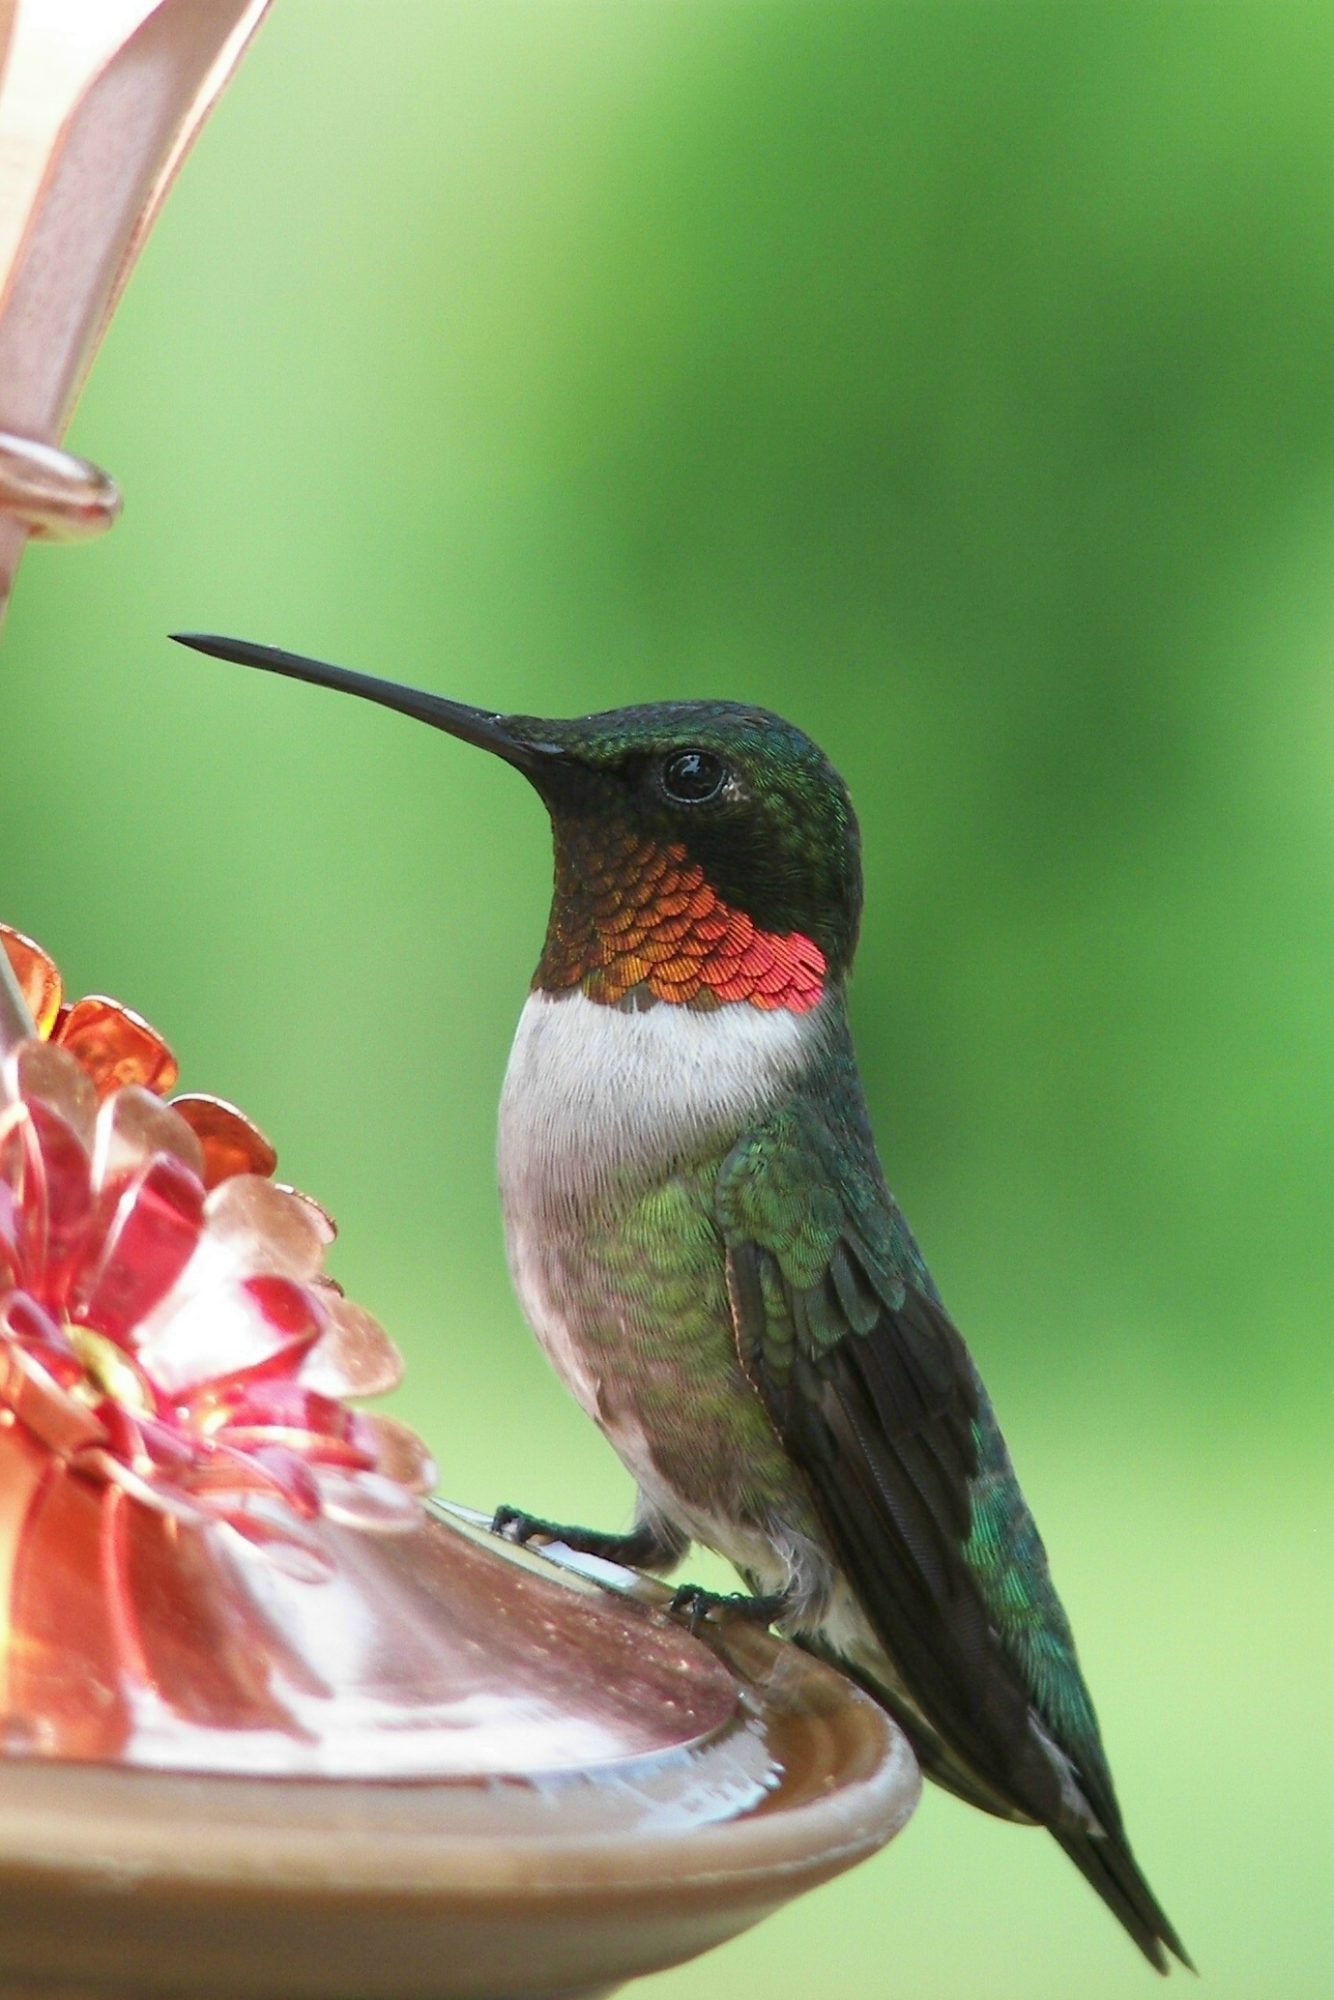 2 Hang up hummingbird feeders